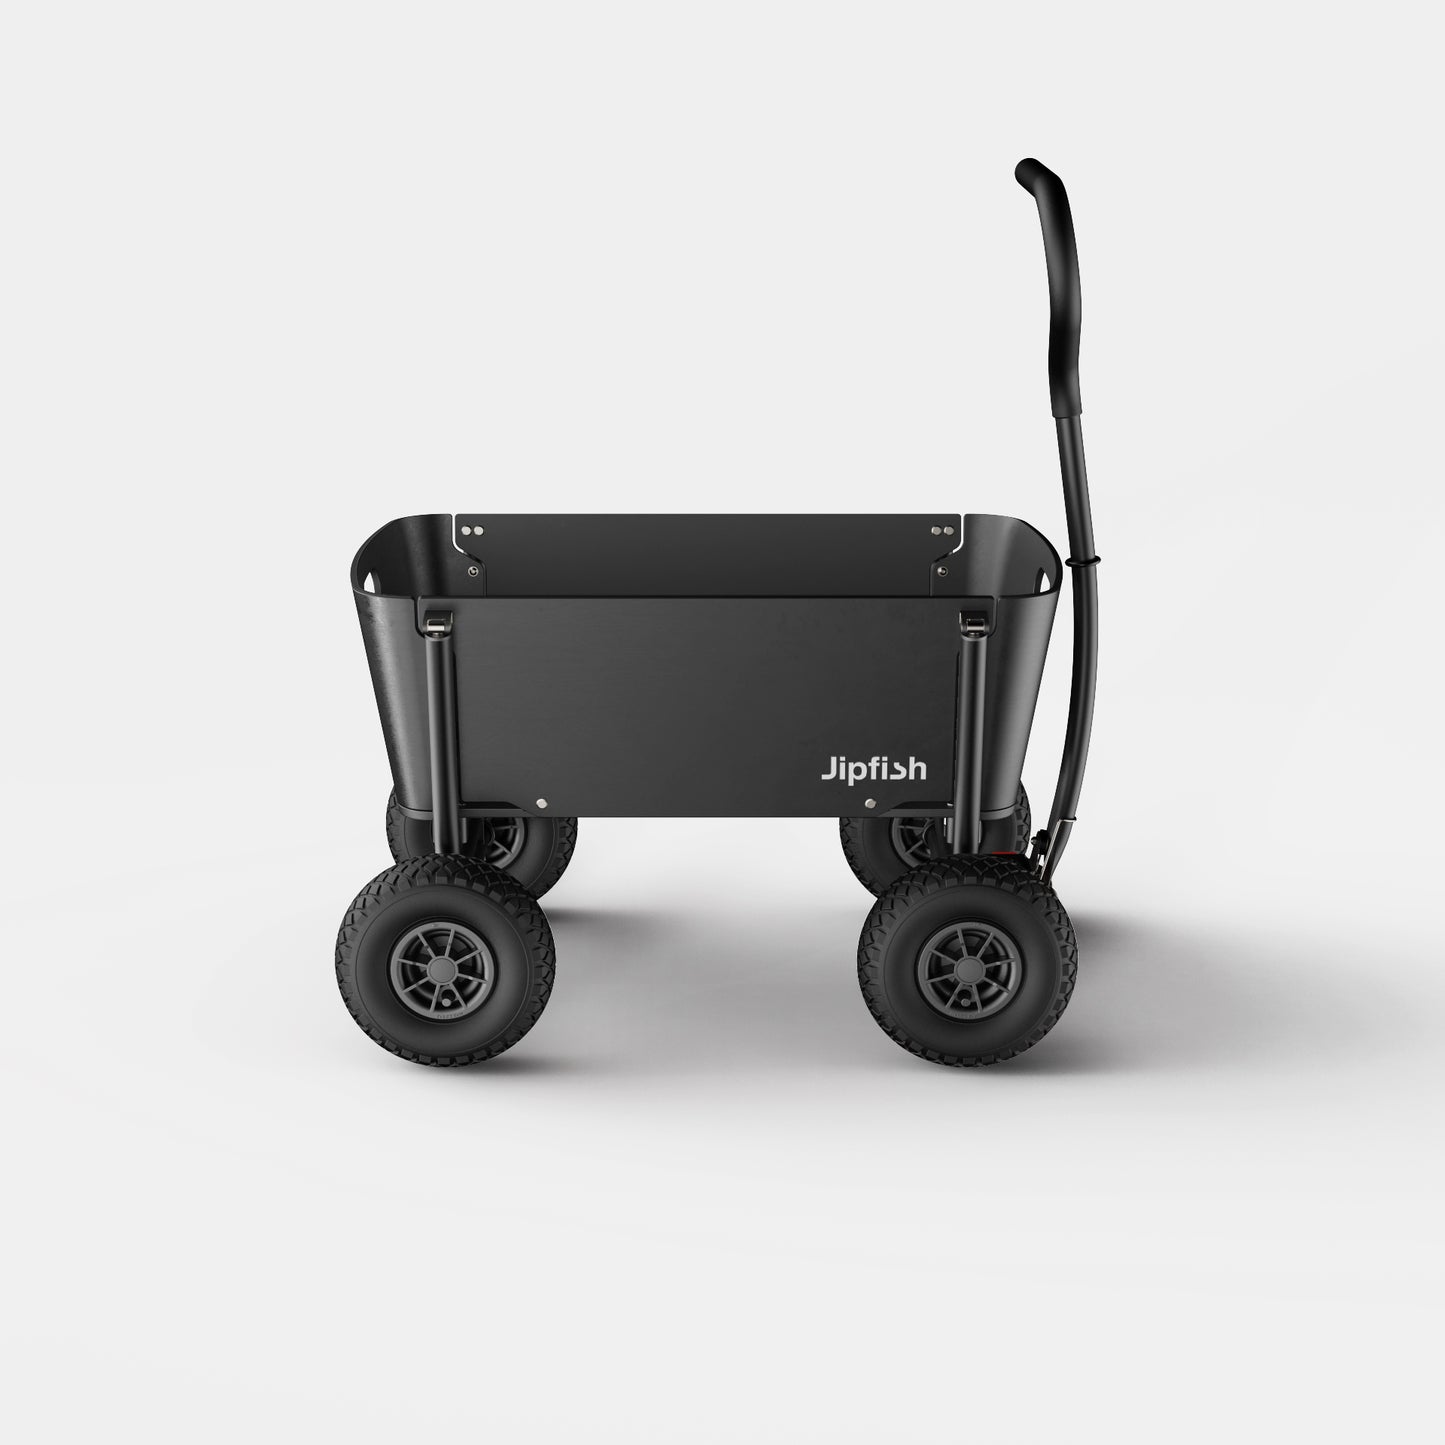 Wagon / Carbon Black